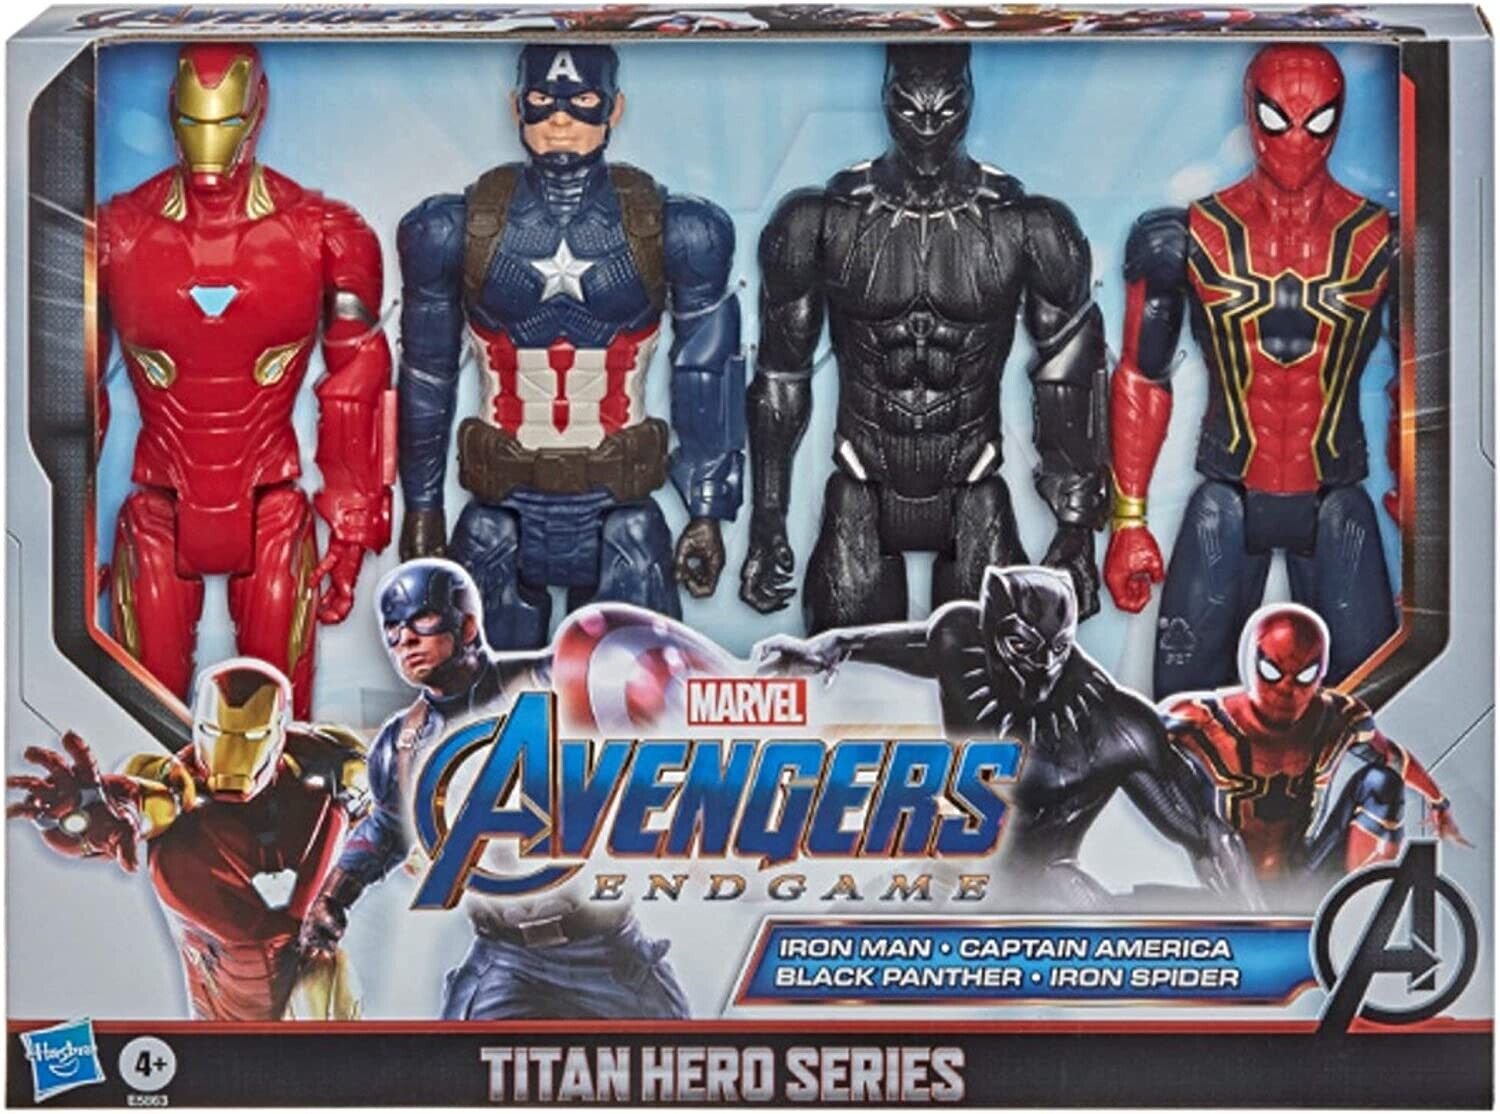 Titan Hero Series